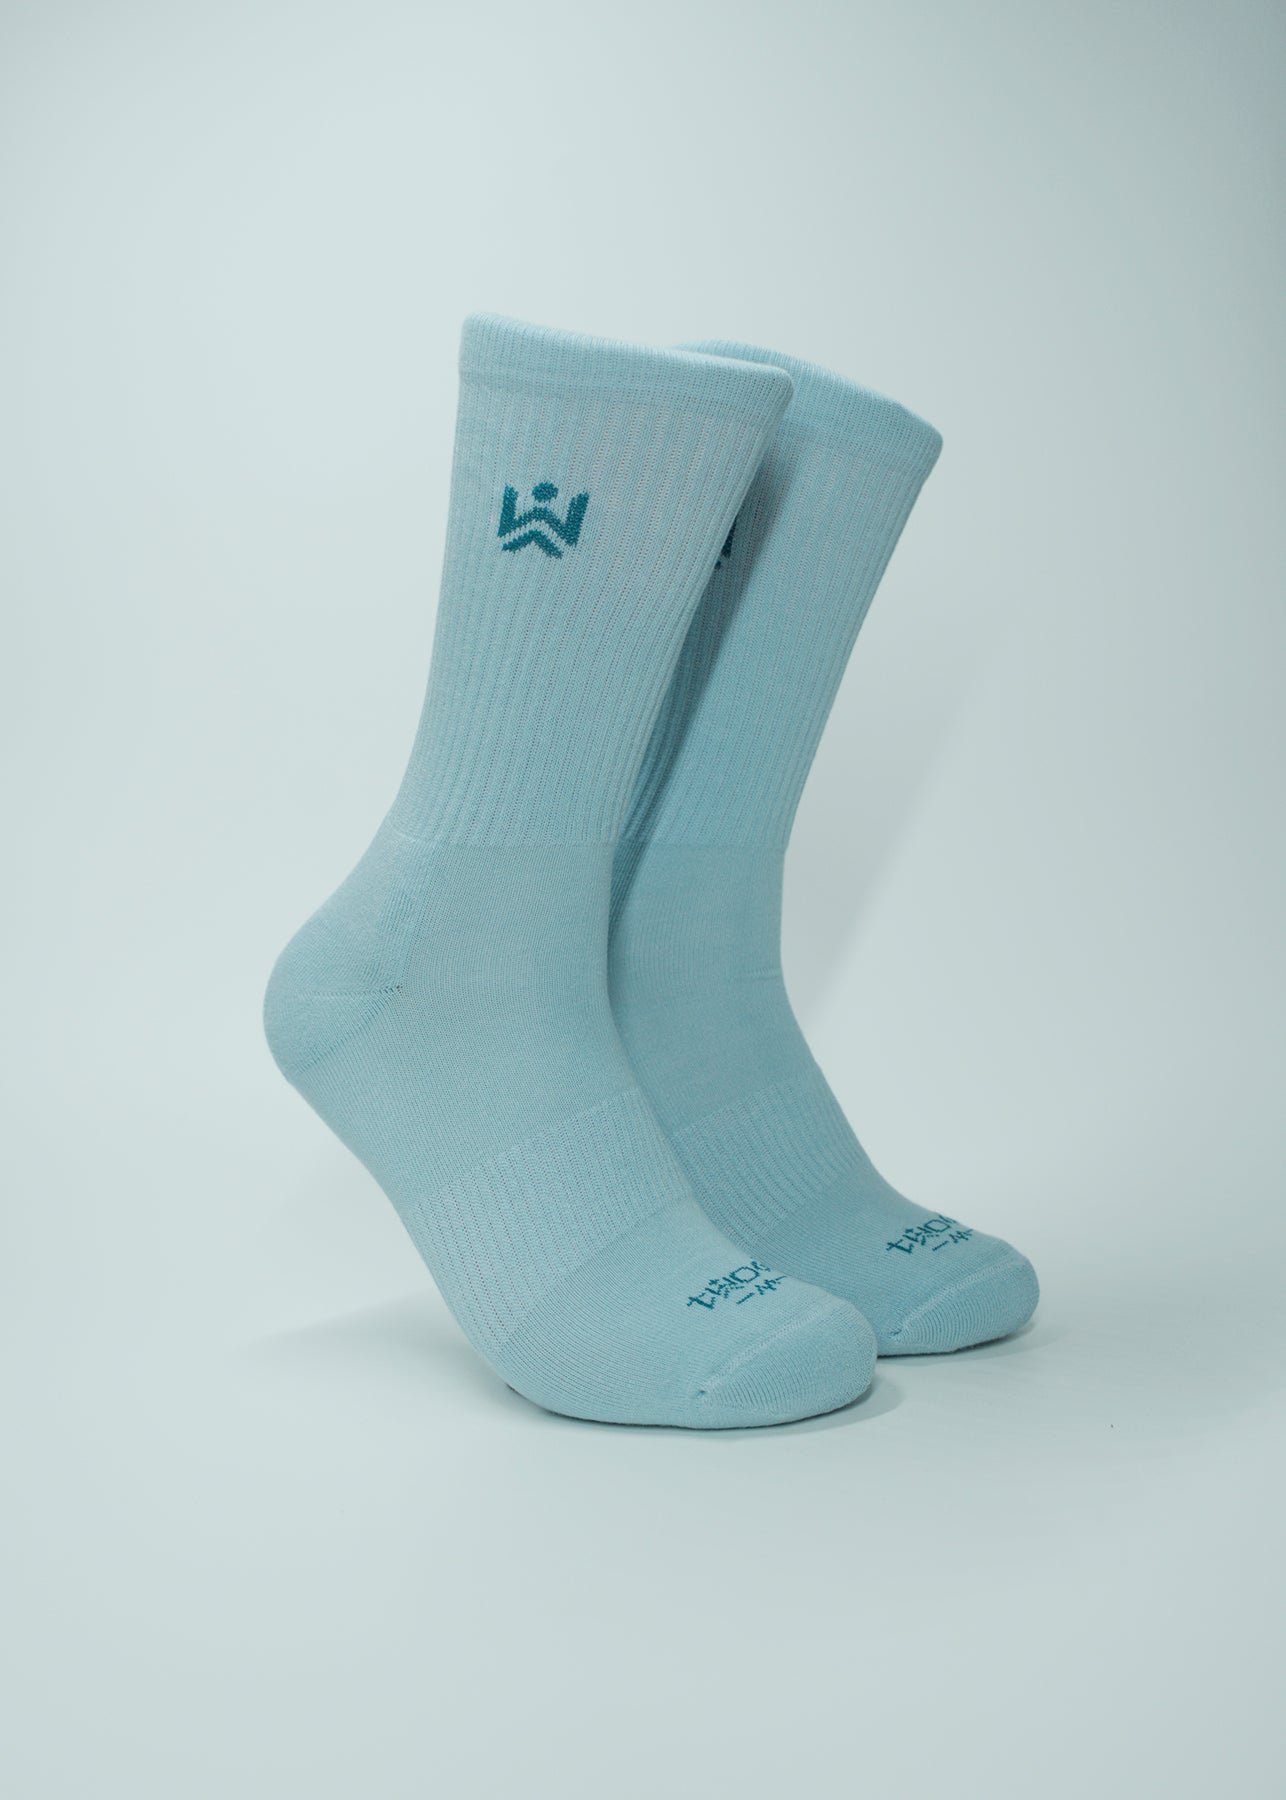 Orizzonte sock